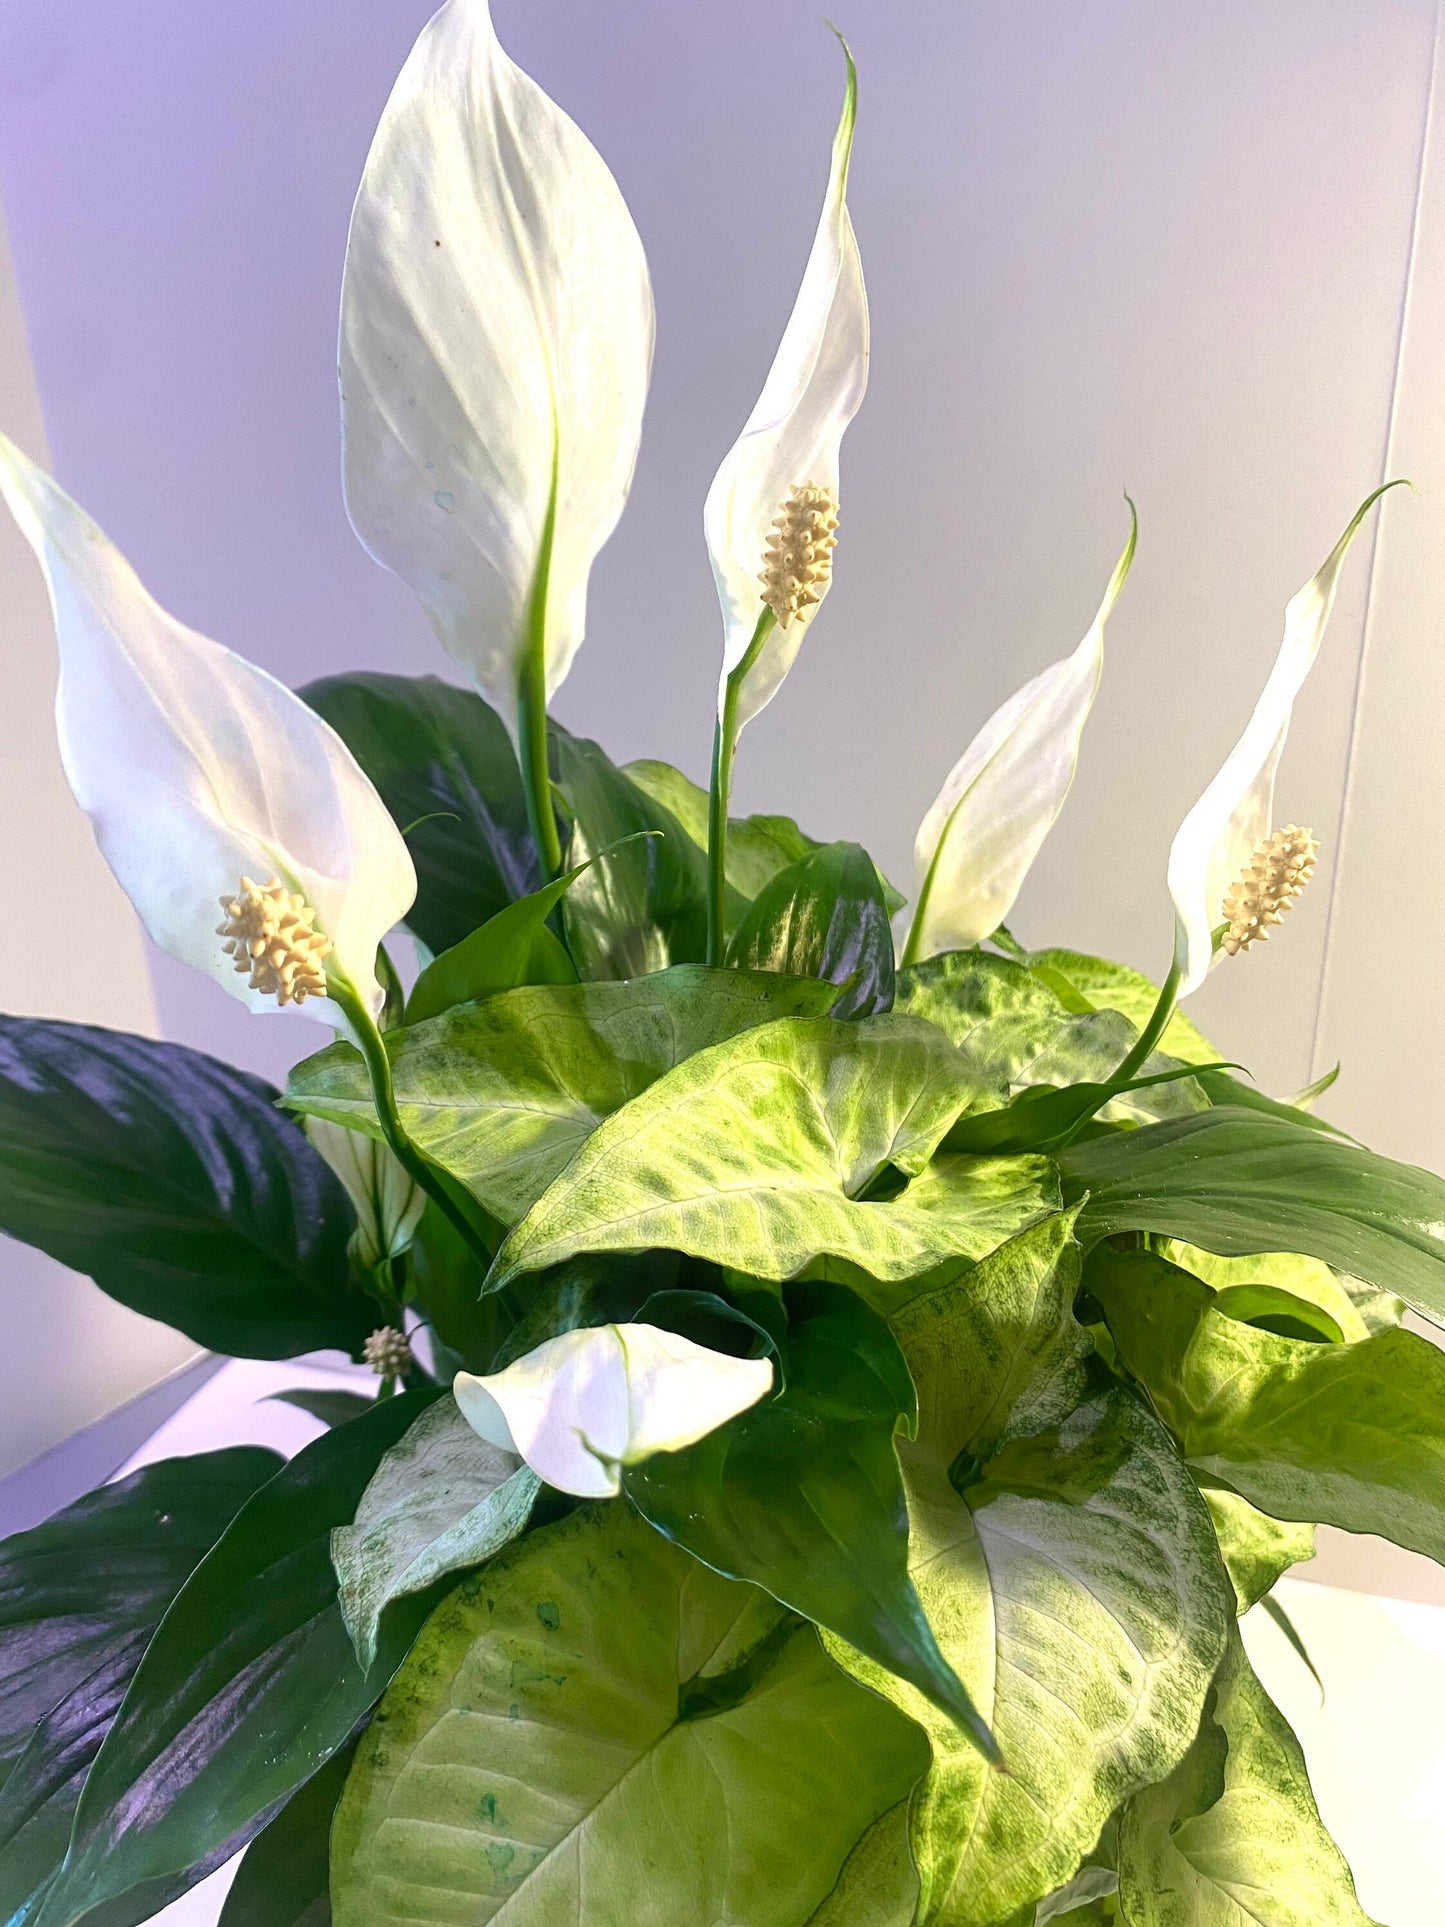 Kokedama - Large Peace Lily with Syngonium arrangement mossball art.